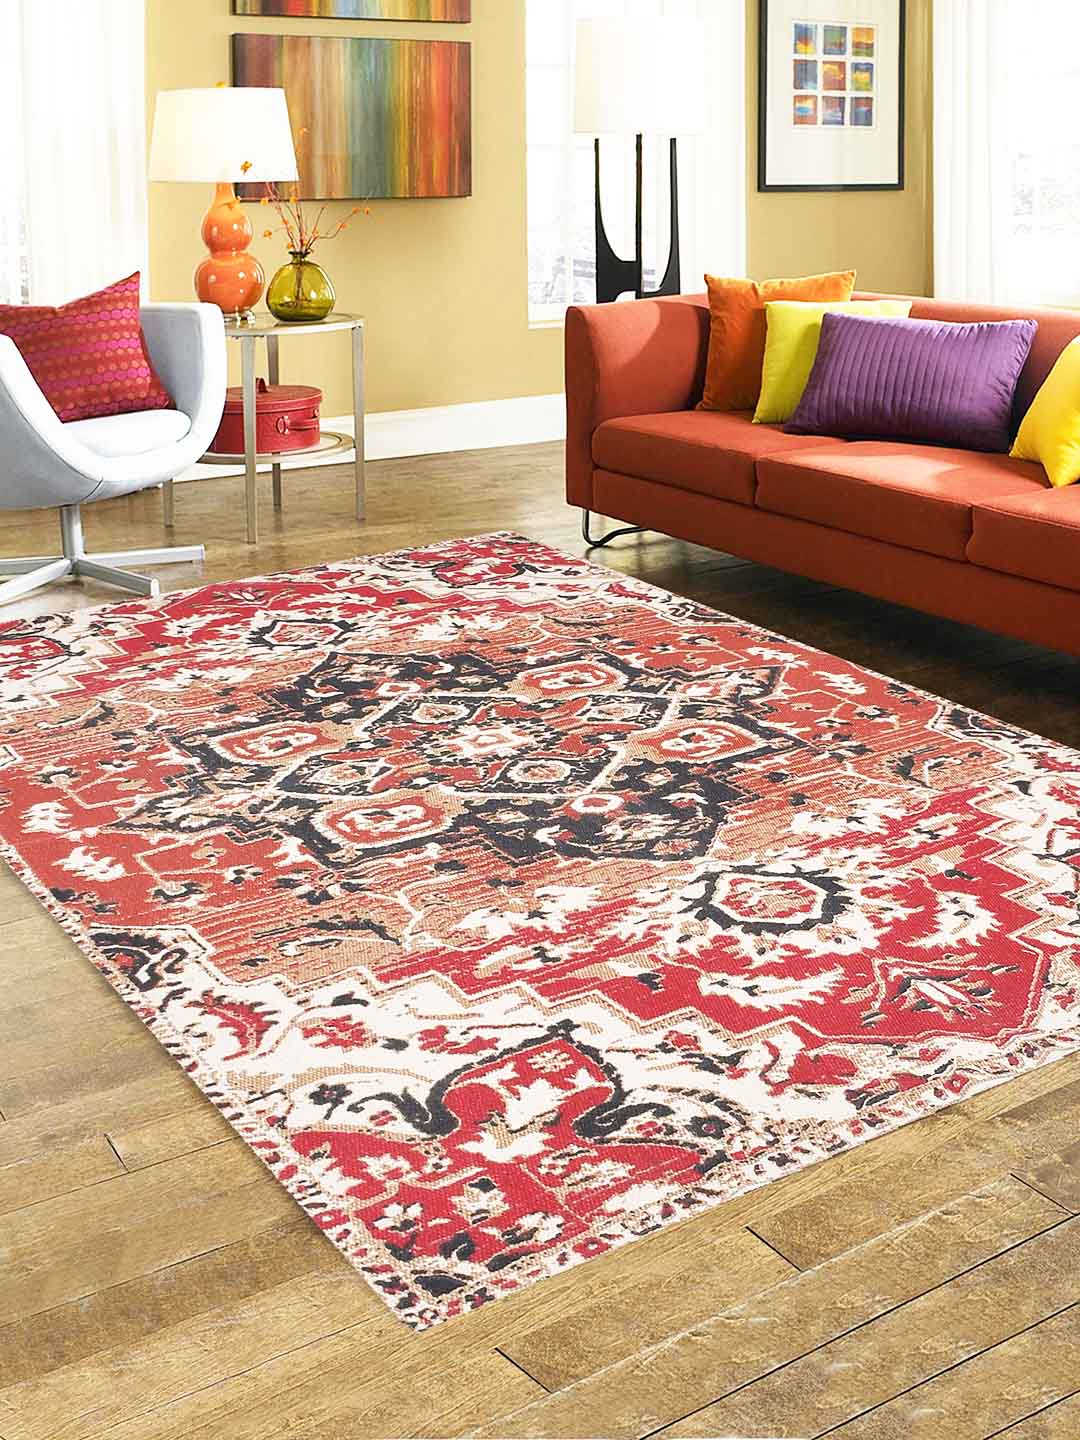 Blanc9 Jodhpur Rusty Red 4'x5.5' Printed Cotton Carpet